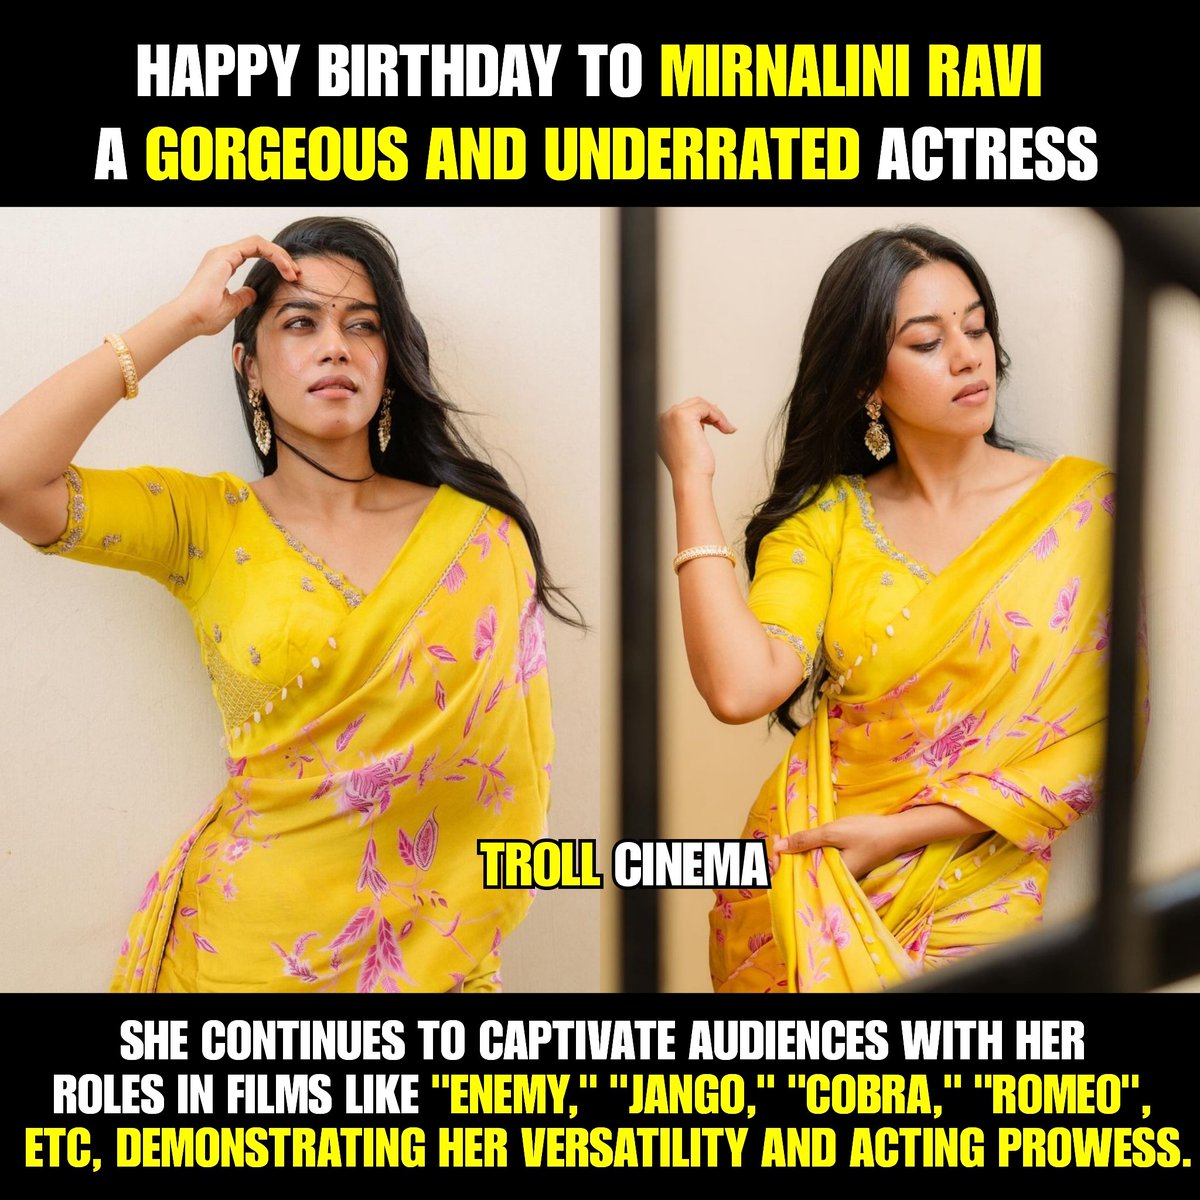 Wishing the talented actress and radiant beauty @mirnaliniravi a happy birthday. #MirnaliniRavi